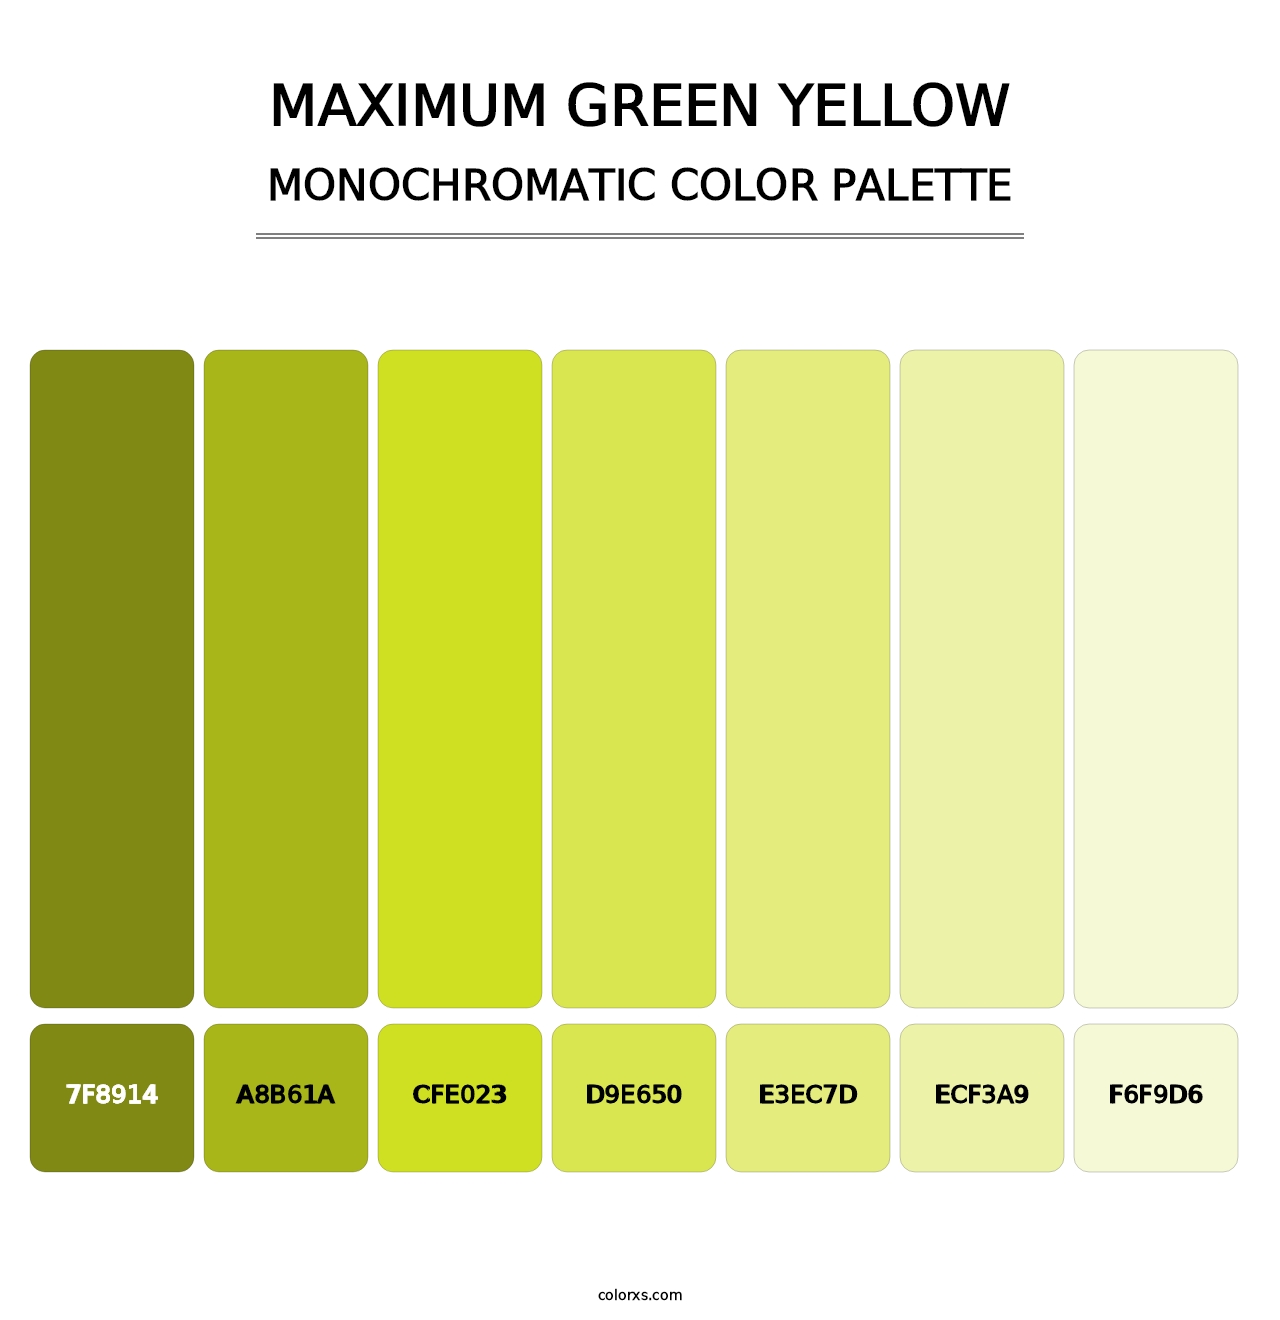 Maximum Green Yellow - Monochromatic Color Palette